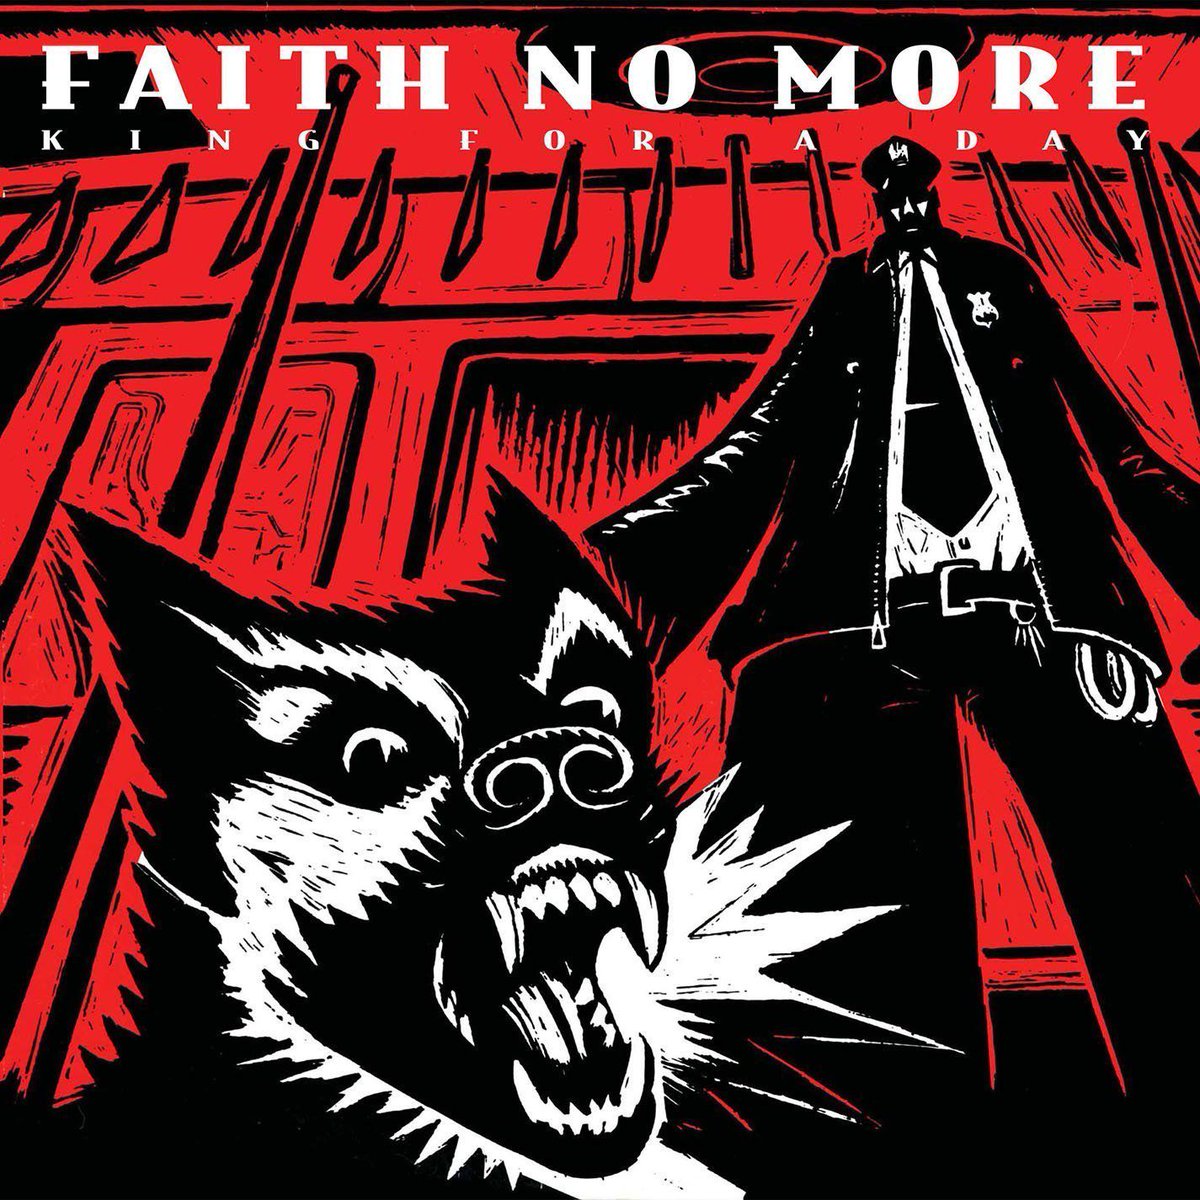 Faith No More'un 5. stüdyo albümü olan 'King For a Day, Fool For a Lifetime', 29 yıl önce bugün çıktı ❤ #faithnomoreturkey #faithnomore #mikepatton #billygould #roddybottum #mikebordin #treyspruance #deanmenta #kingforadayfoolforalifetime #90s